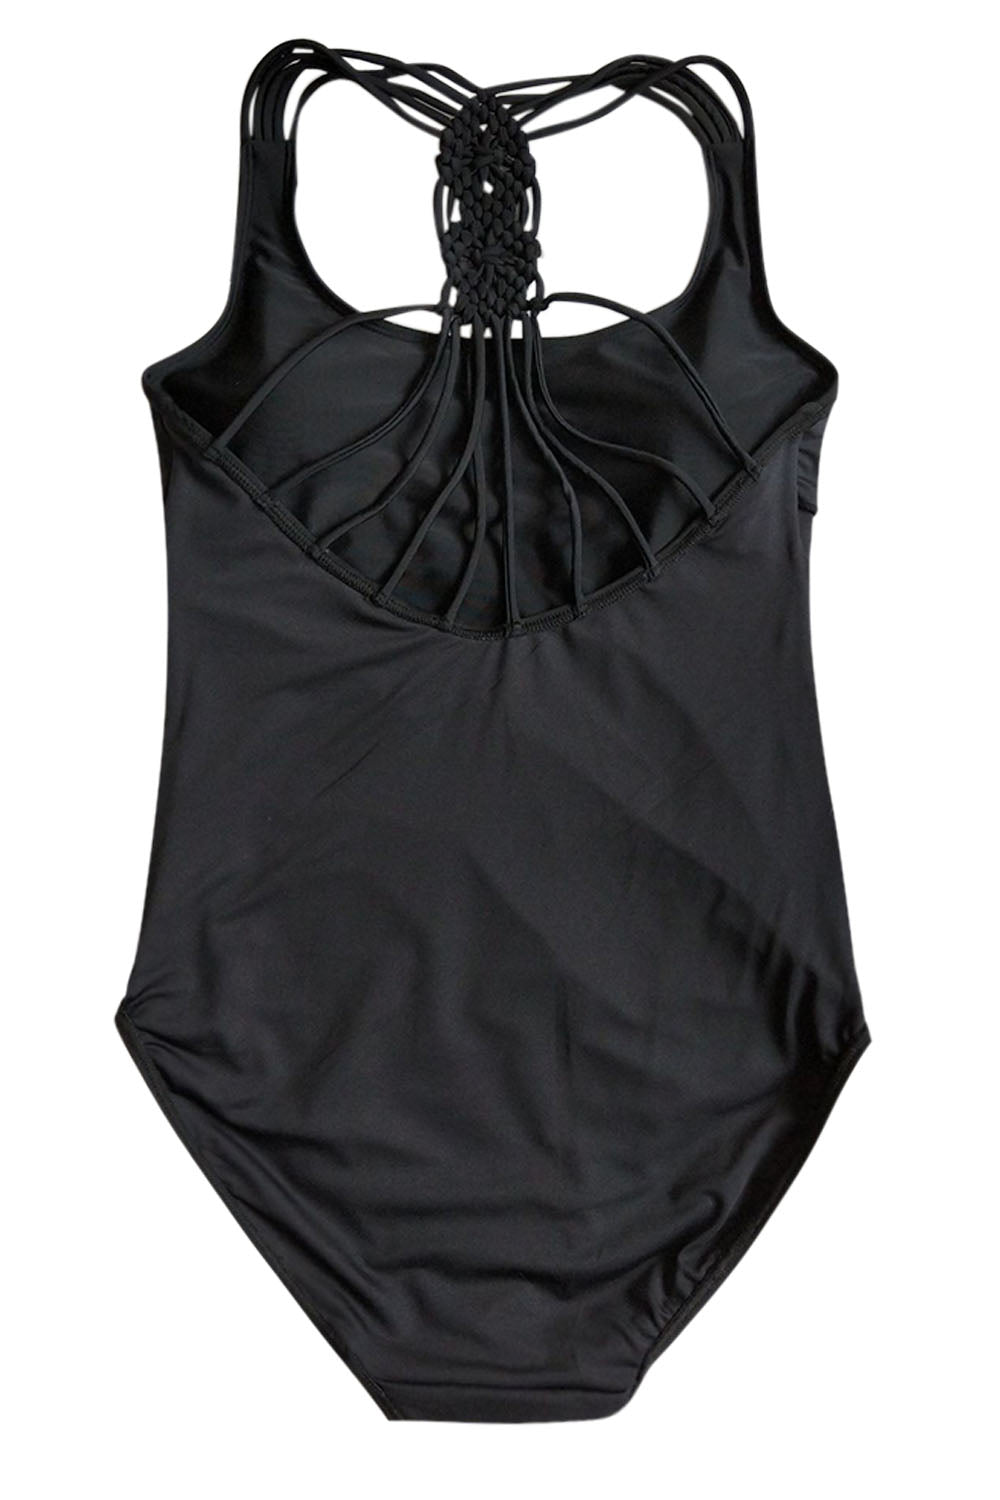 Iyasson Womens 3D Tiger Pattern Print Black One-piece Swimsuit